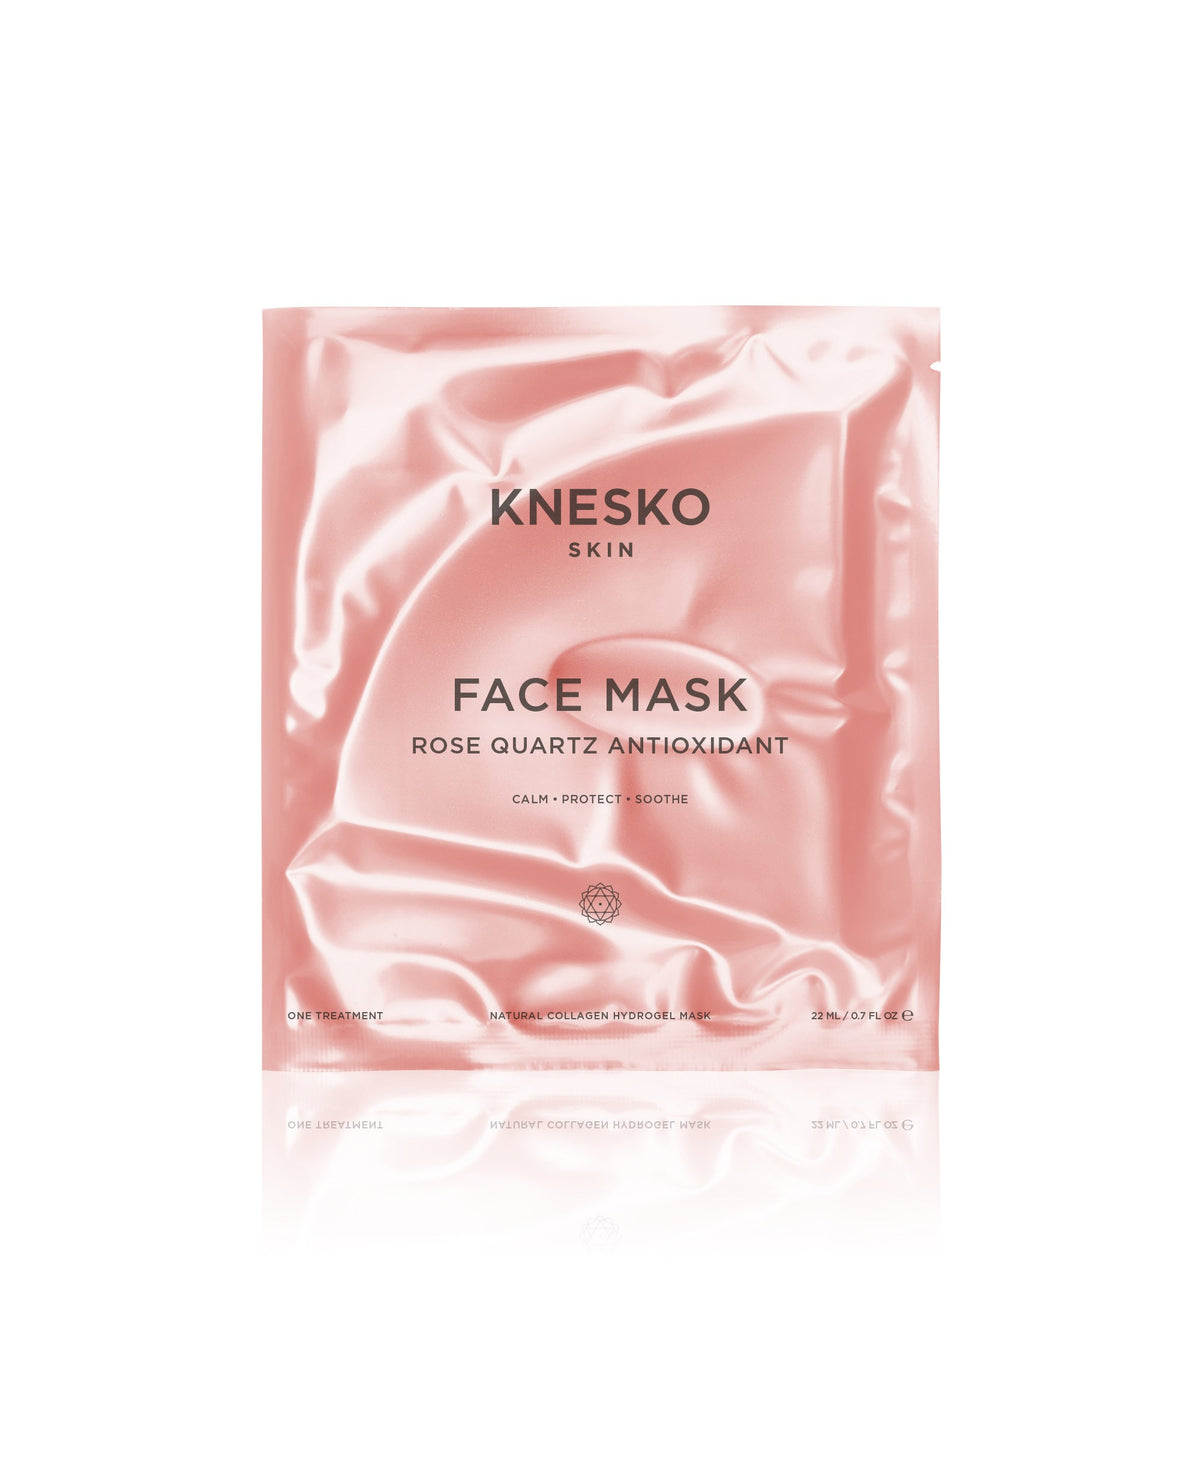 Rose Quartz Antioxidant Collagen Face Mask